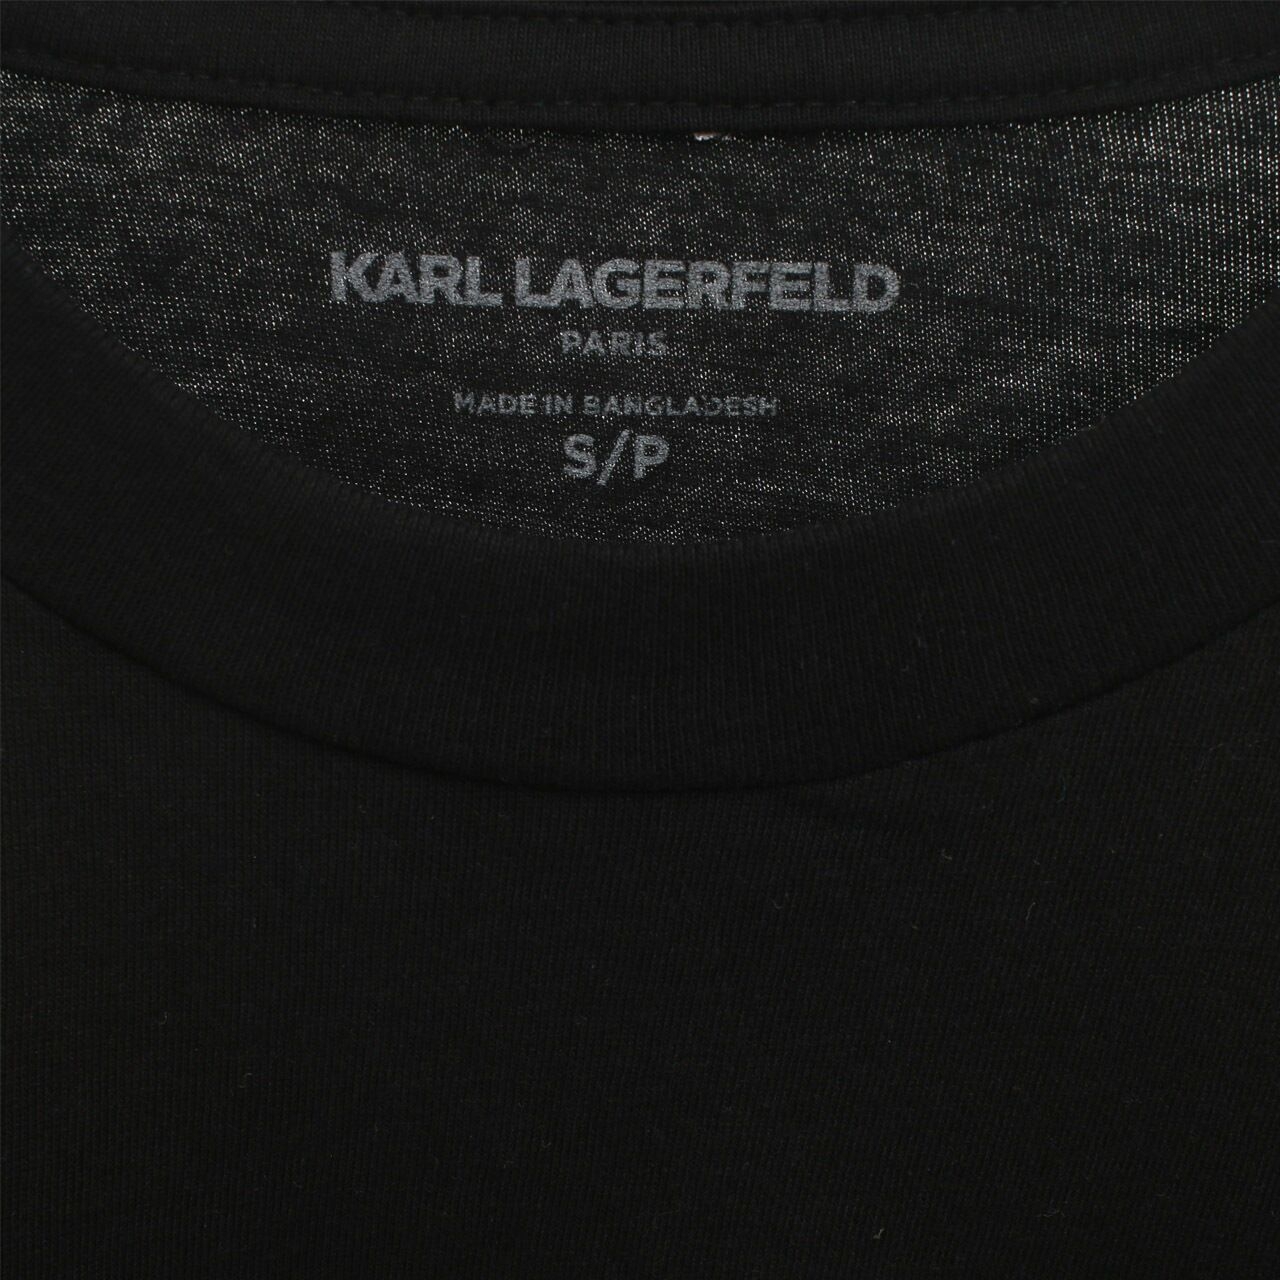 Karl Lagerfeld Paris Black Long Sleeve Tshirt